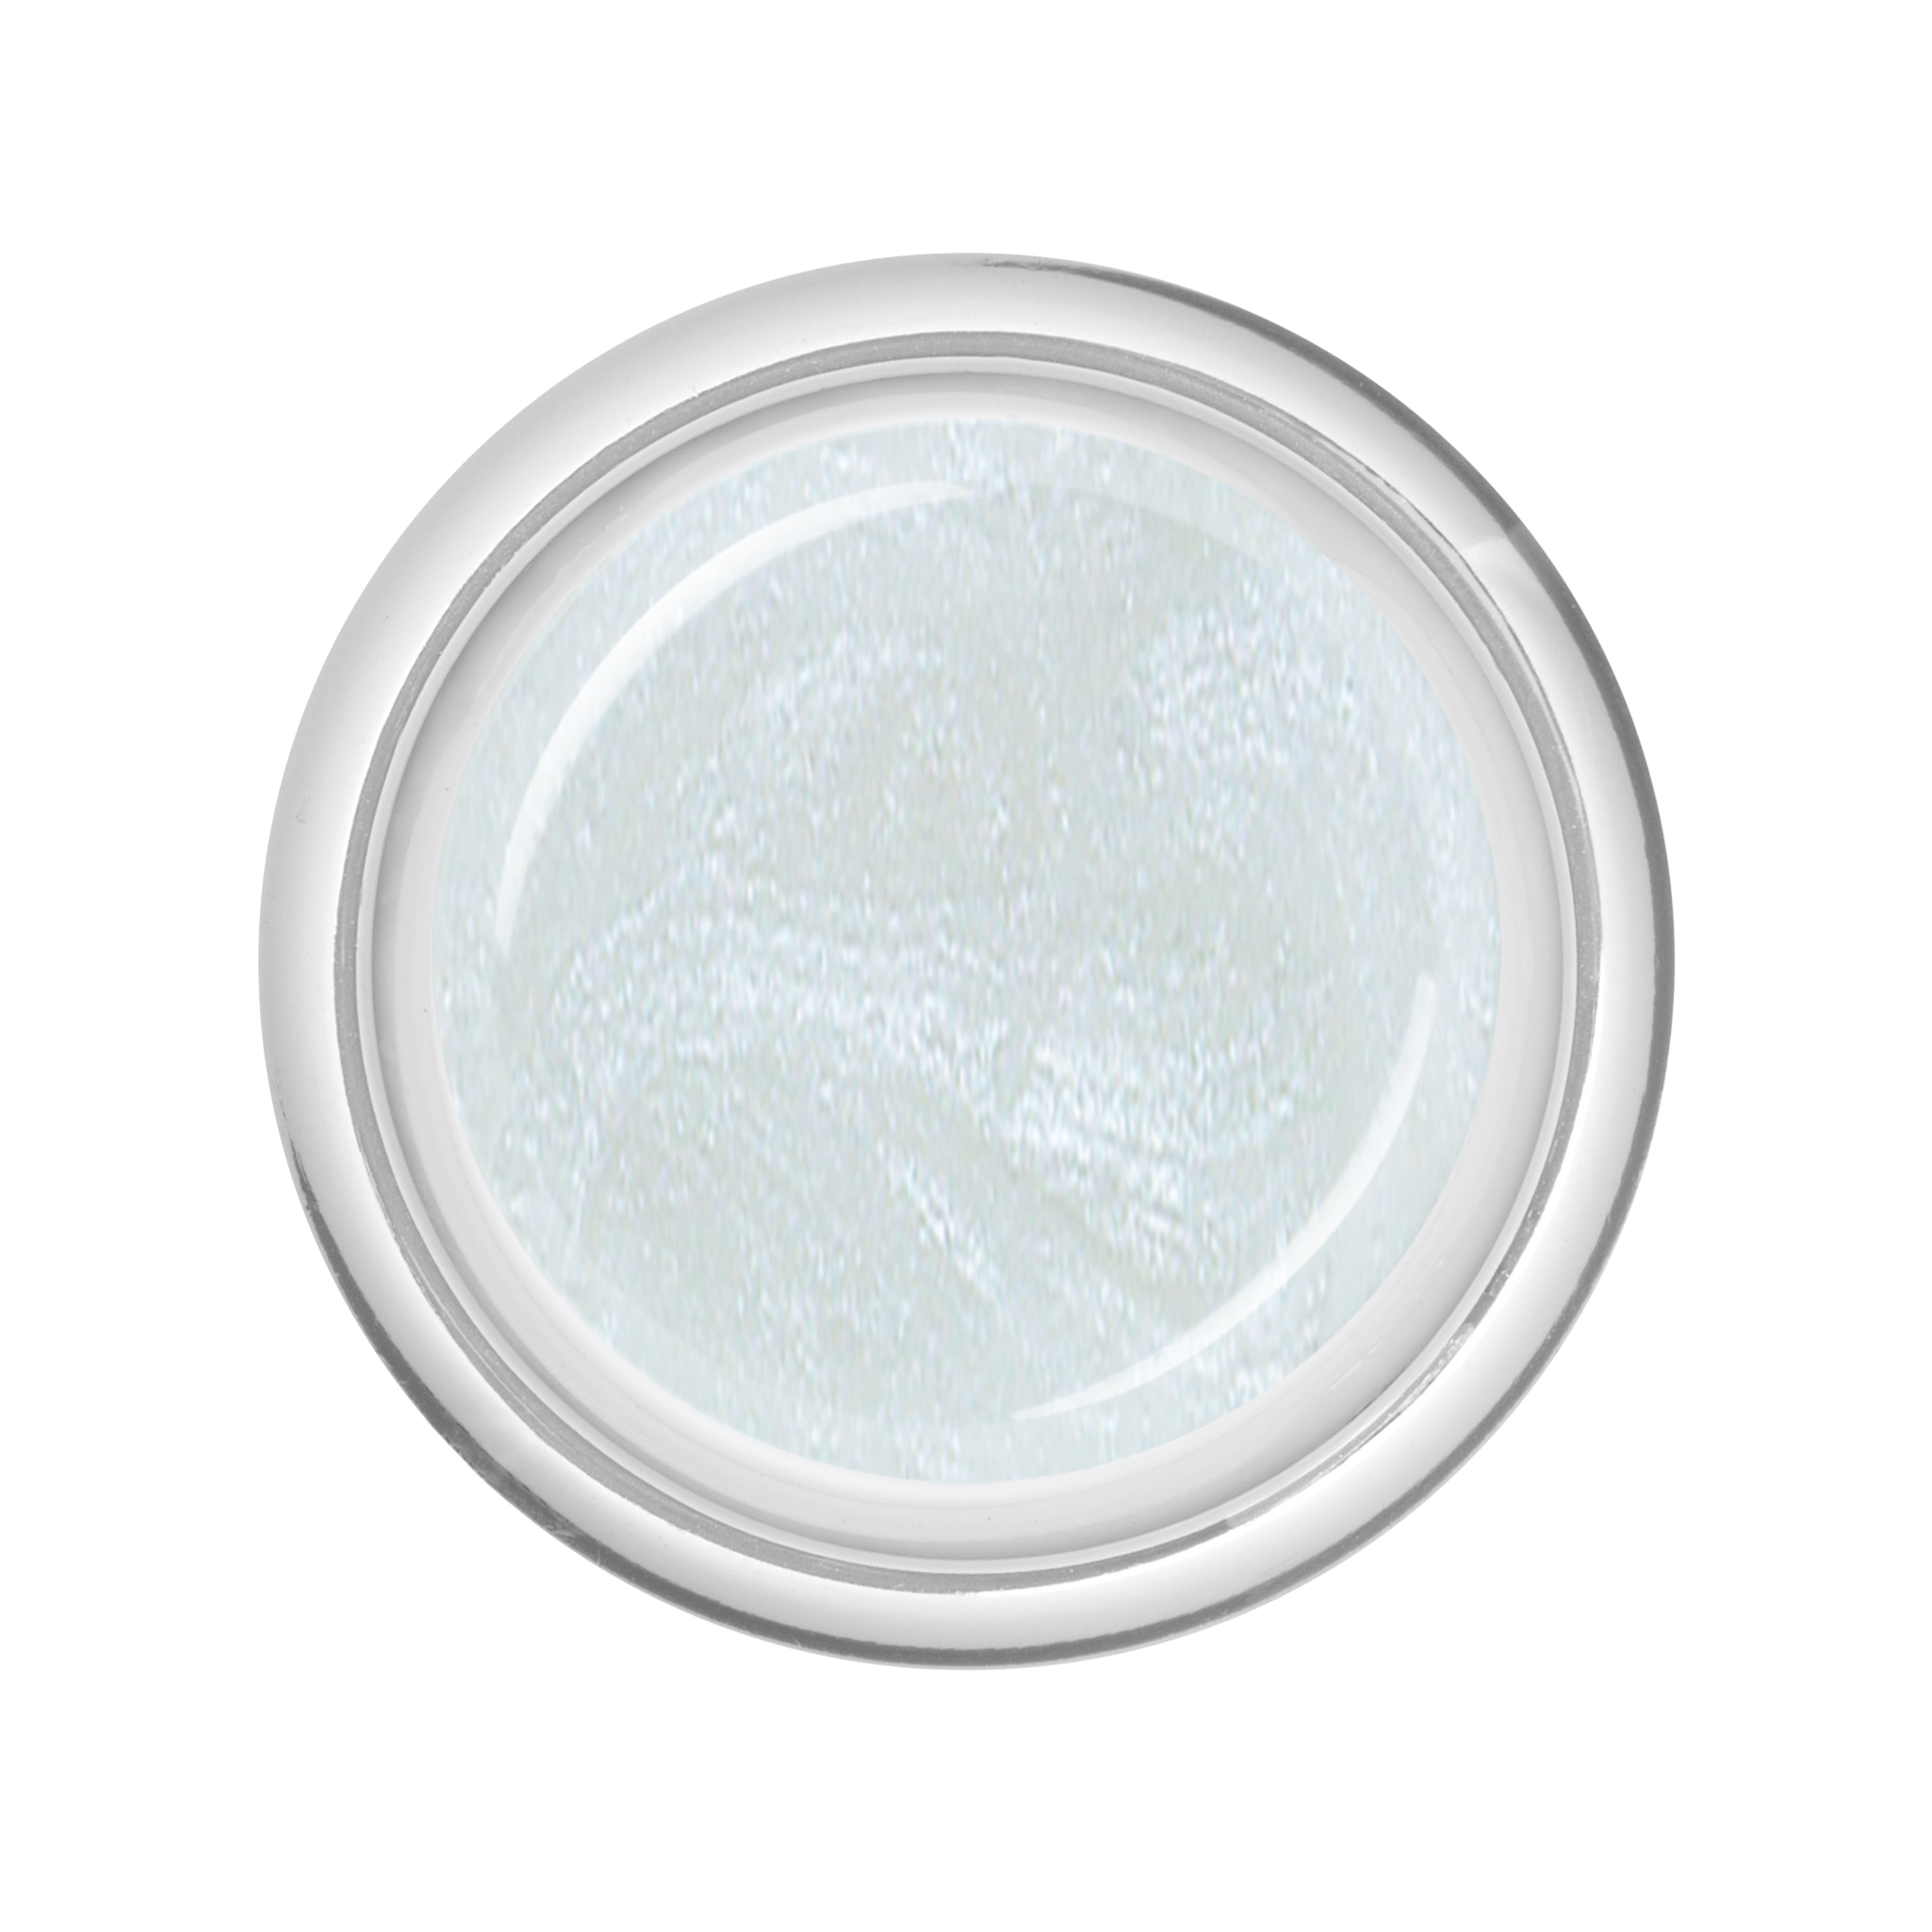 BAEHR BEAUTY CONCEPT - NAILS Colour-Gel Metallic White 5 g